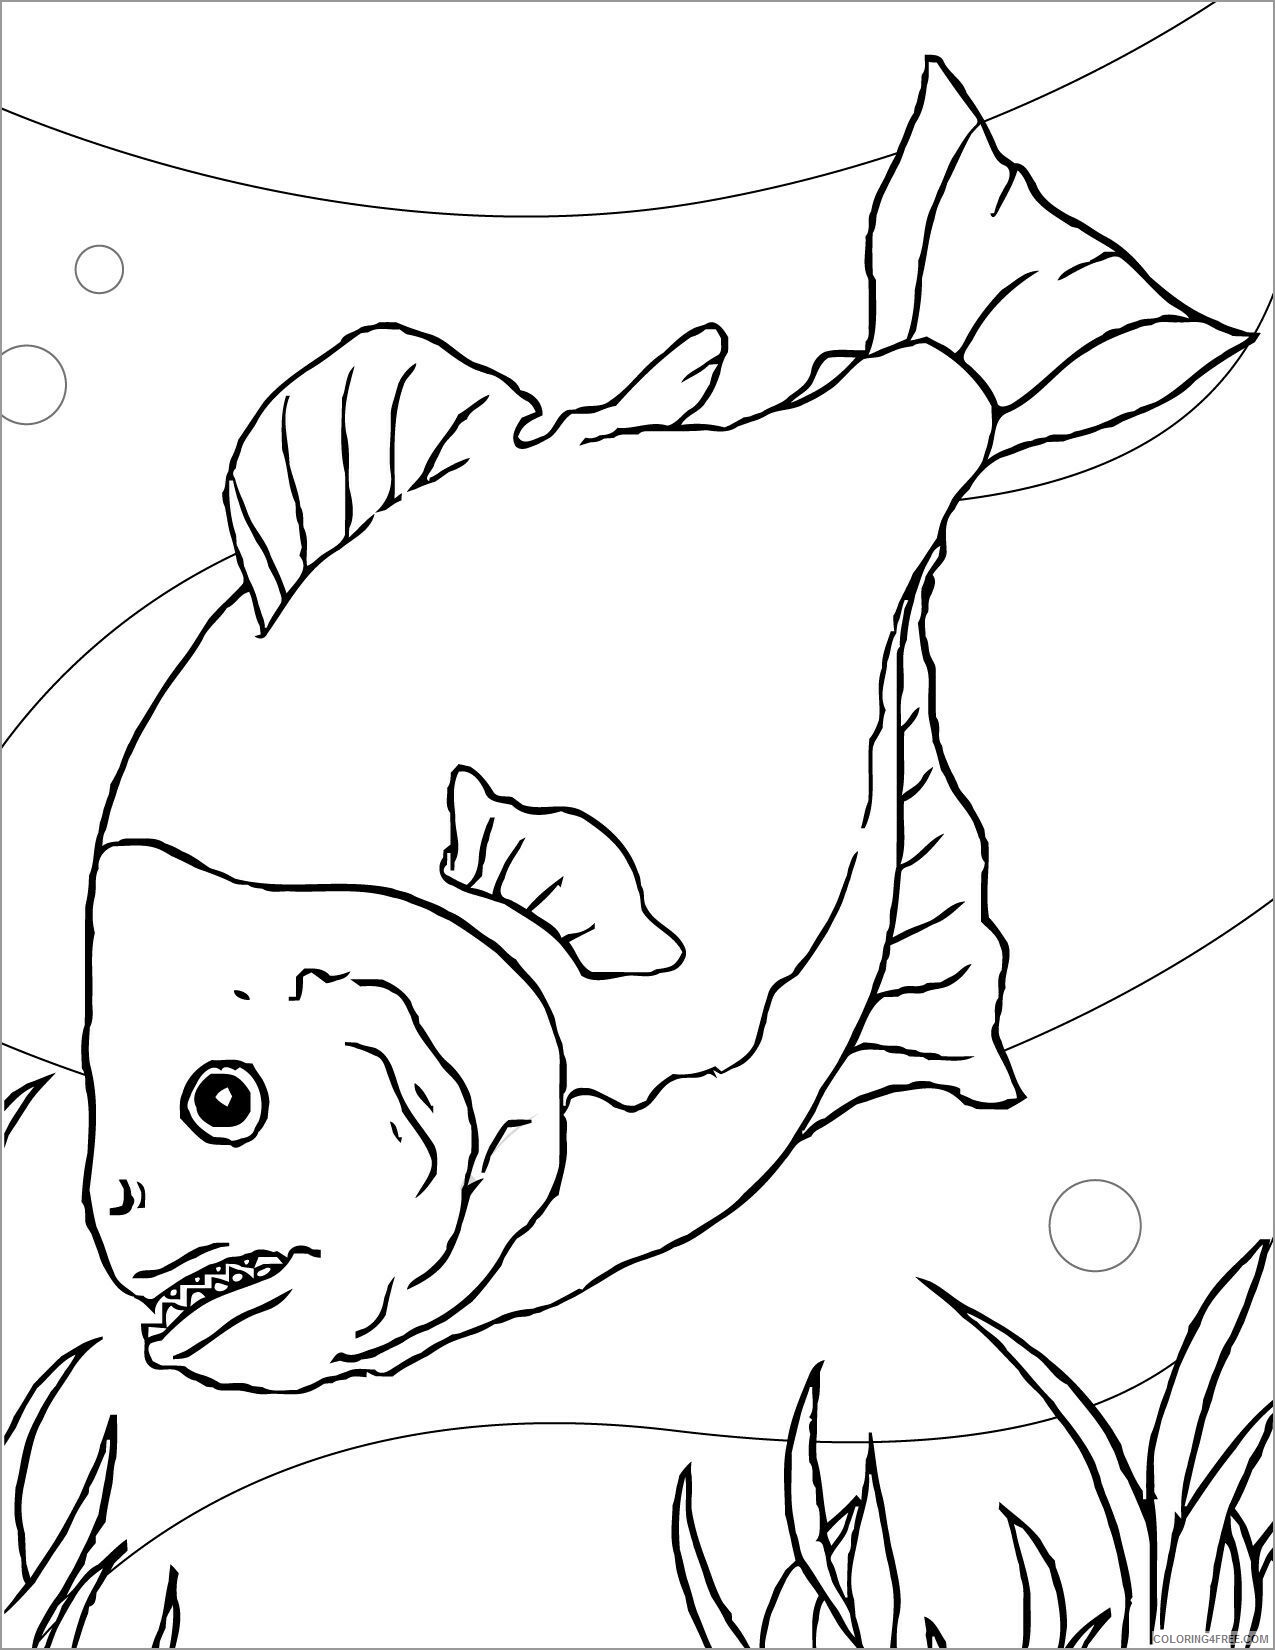 Piranhas Coloring Pages Animal Printable Sheets easy piranha 2021 3943 Coloring4free